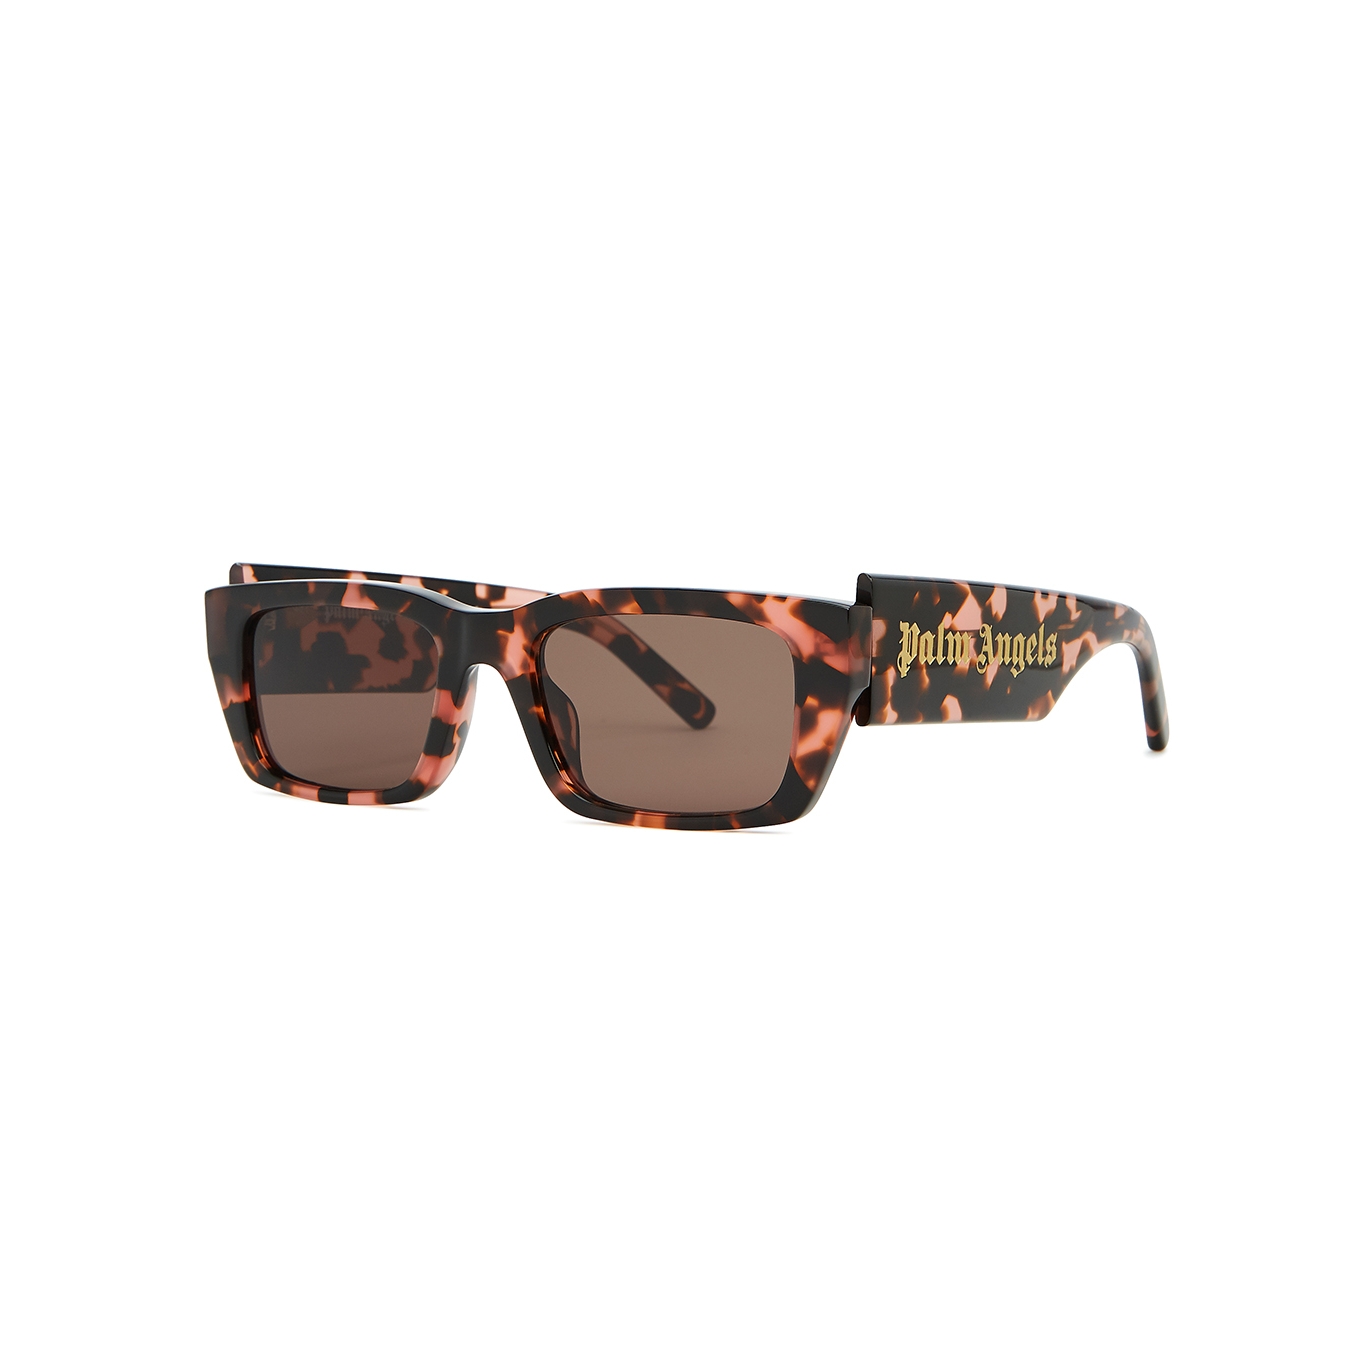 Palm Angels Tortoiseshell Rectangle-Frame Sunglasses, Sunglasses - Brown